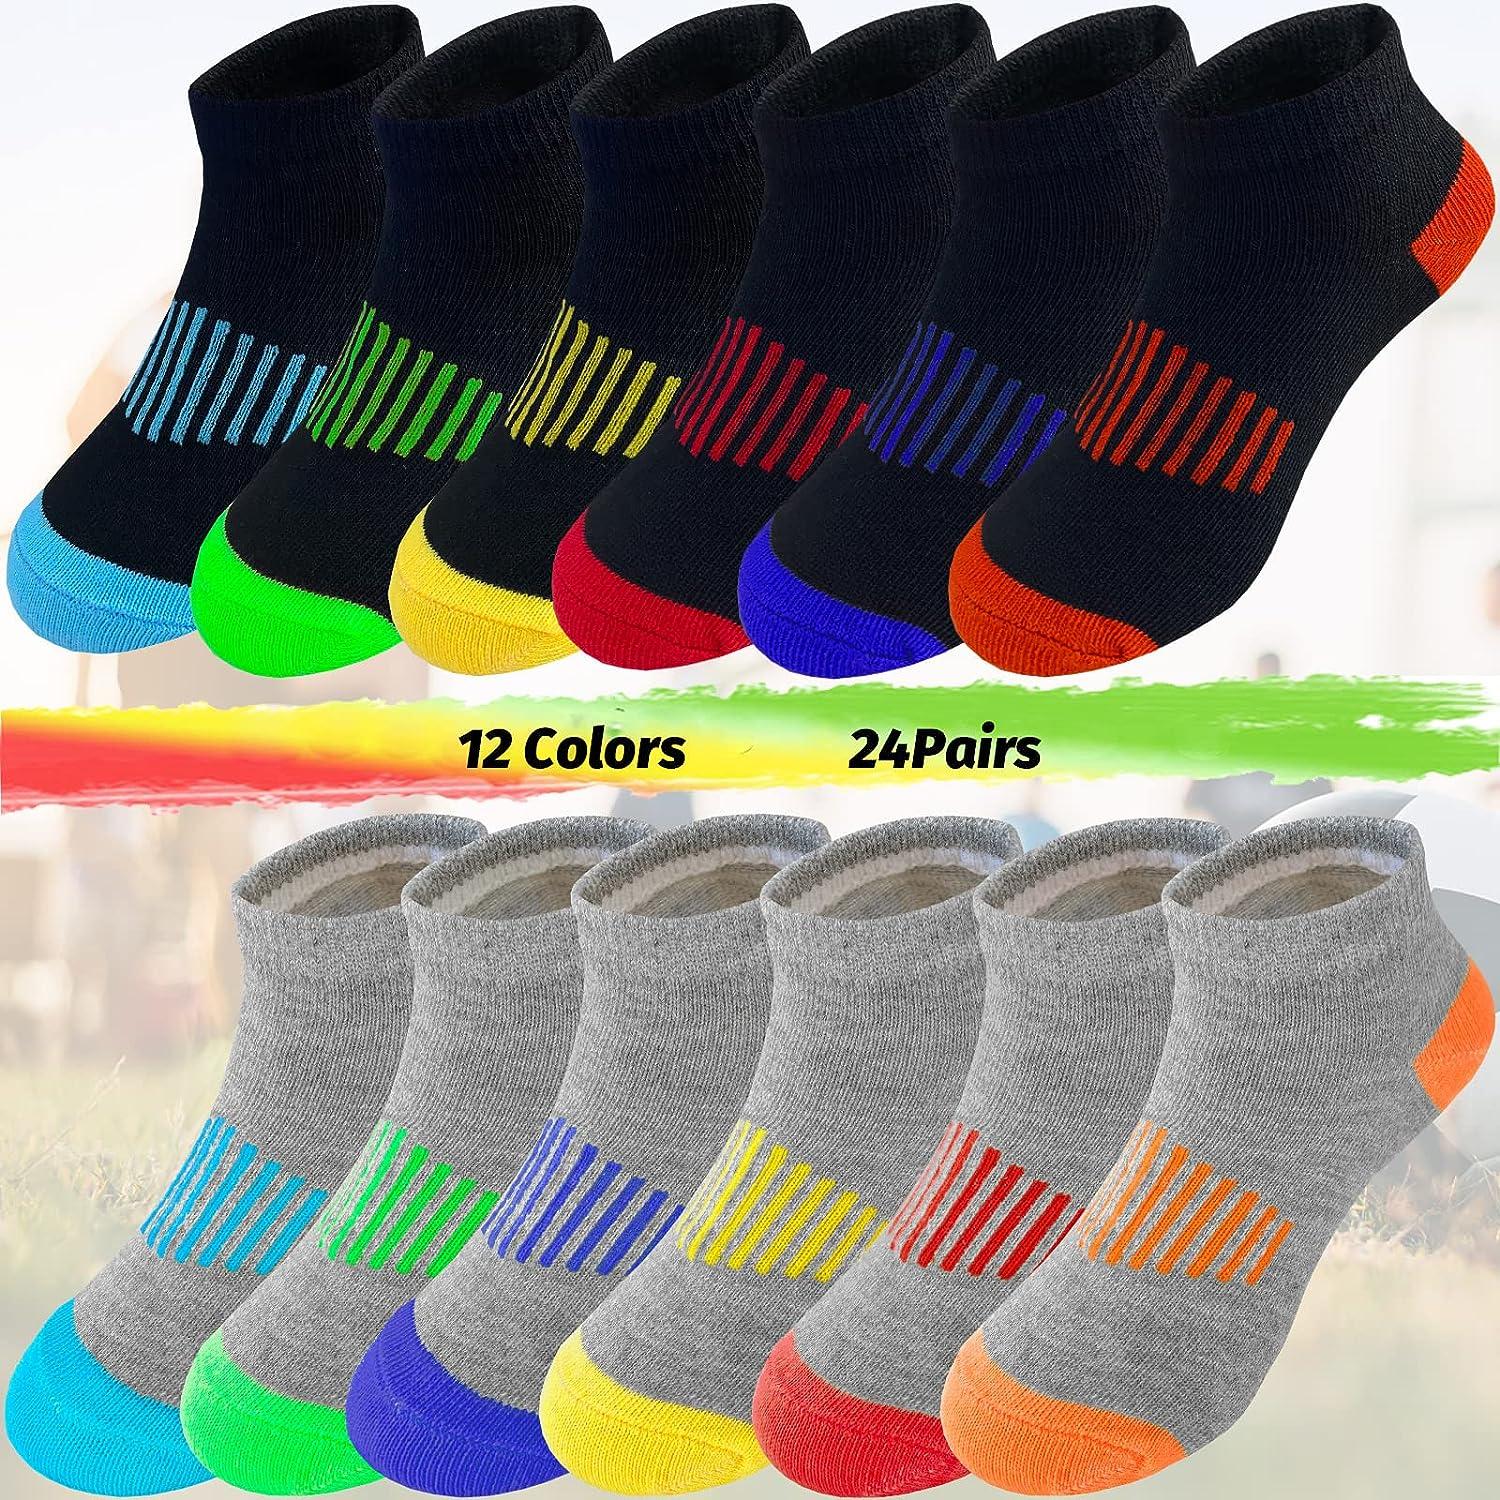 Tsmollyu Boy Socks 24 Pairs Half Cushioned Low Cut Socks Ankle Athletic  Cotton Socks For Little Big Kids Age 3-10 Multicolor #3 7-10 Years